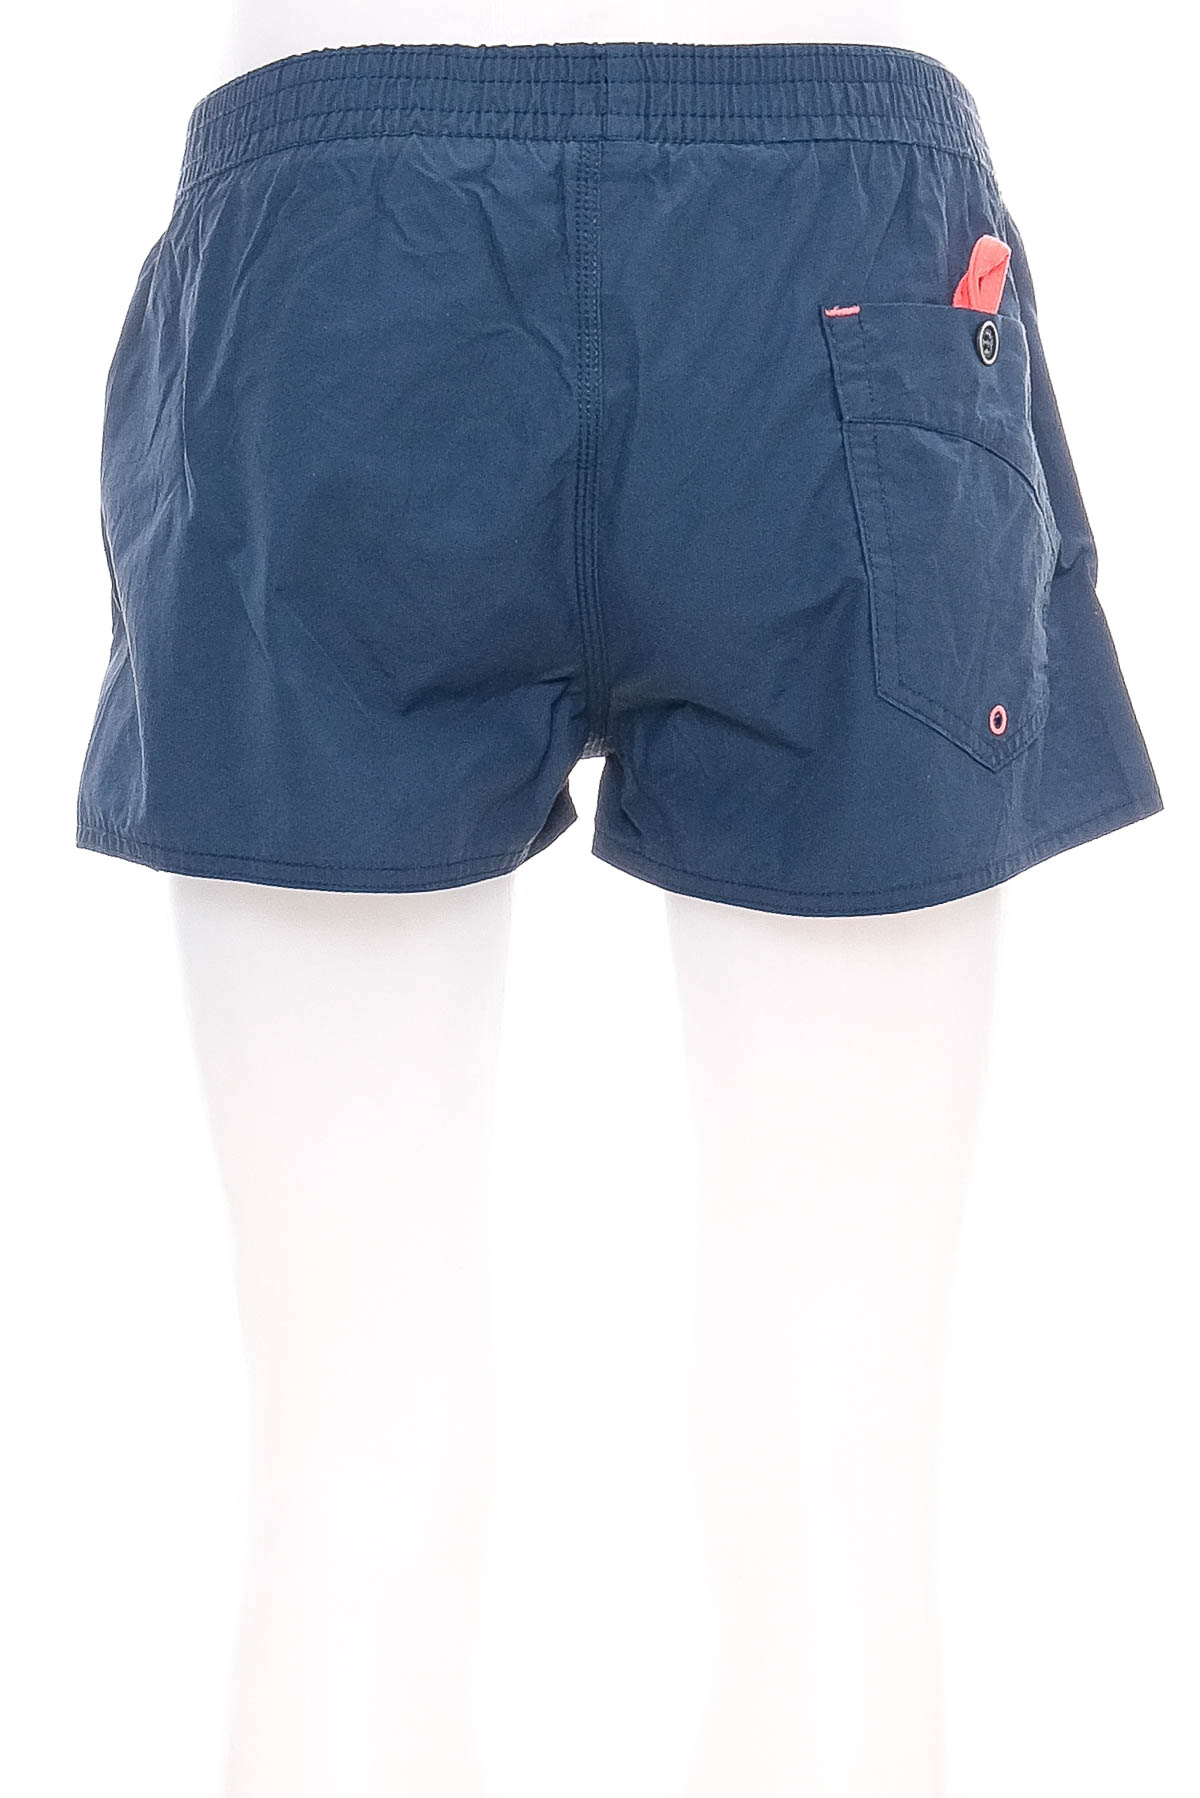 Men's shorts - DIESEL - 1